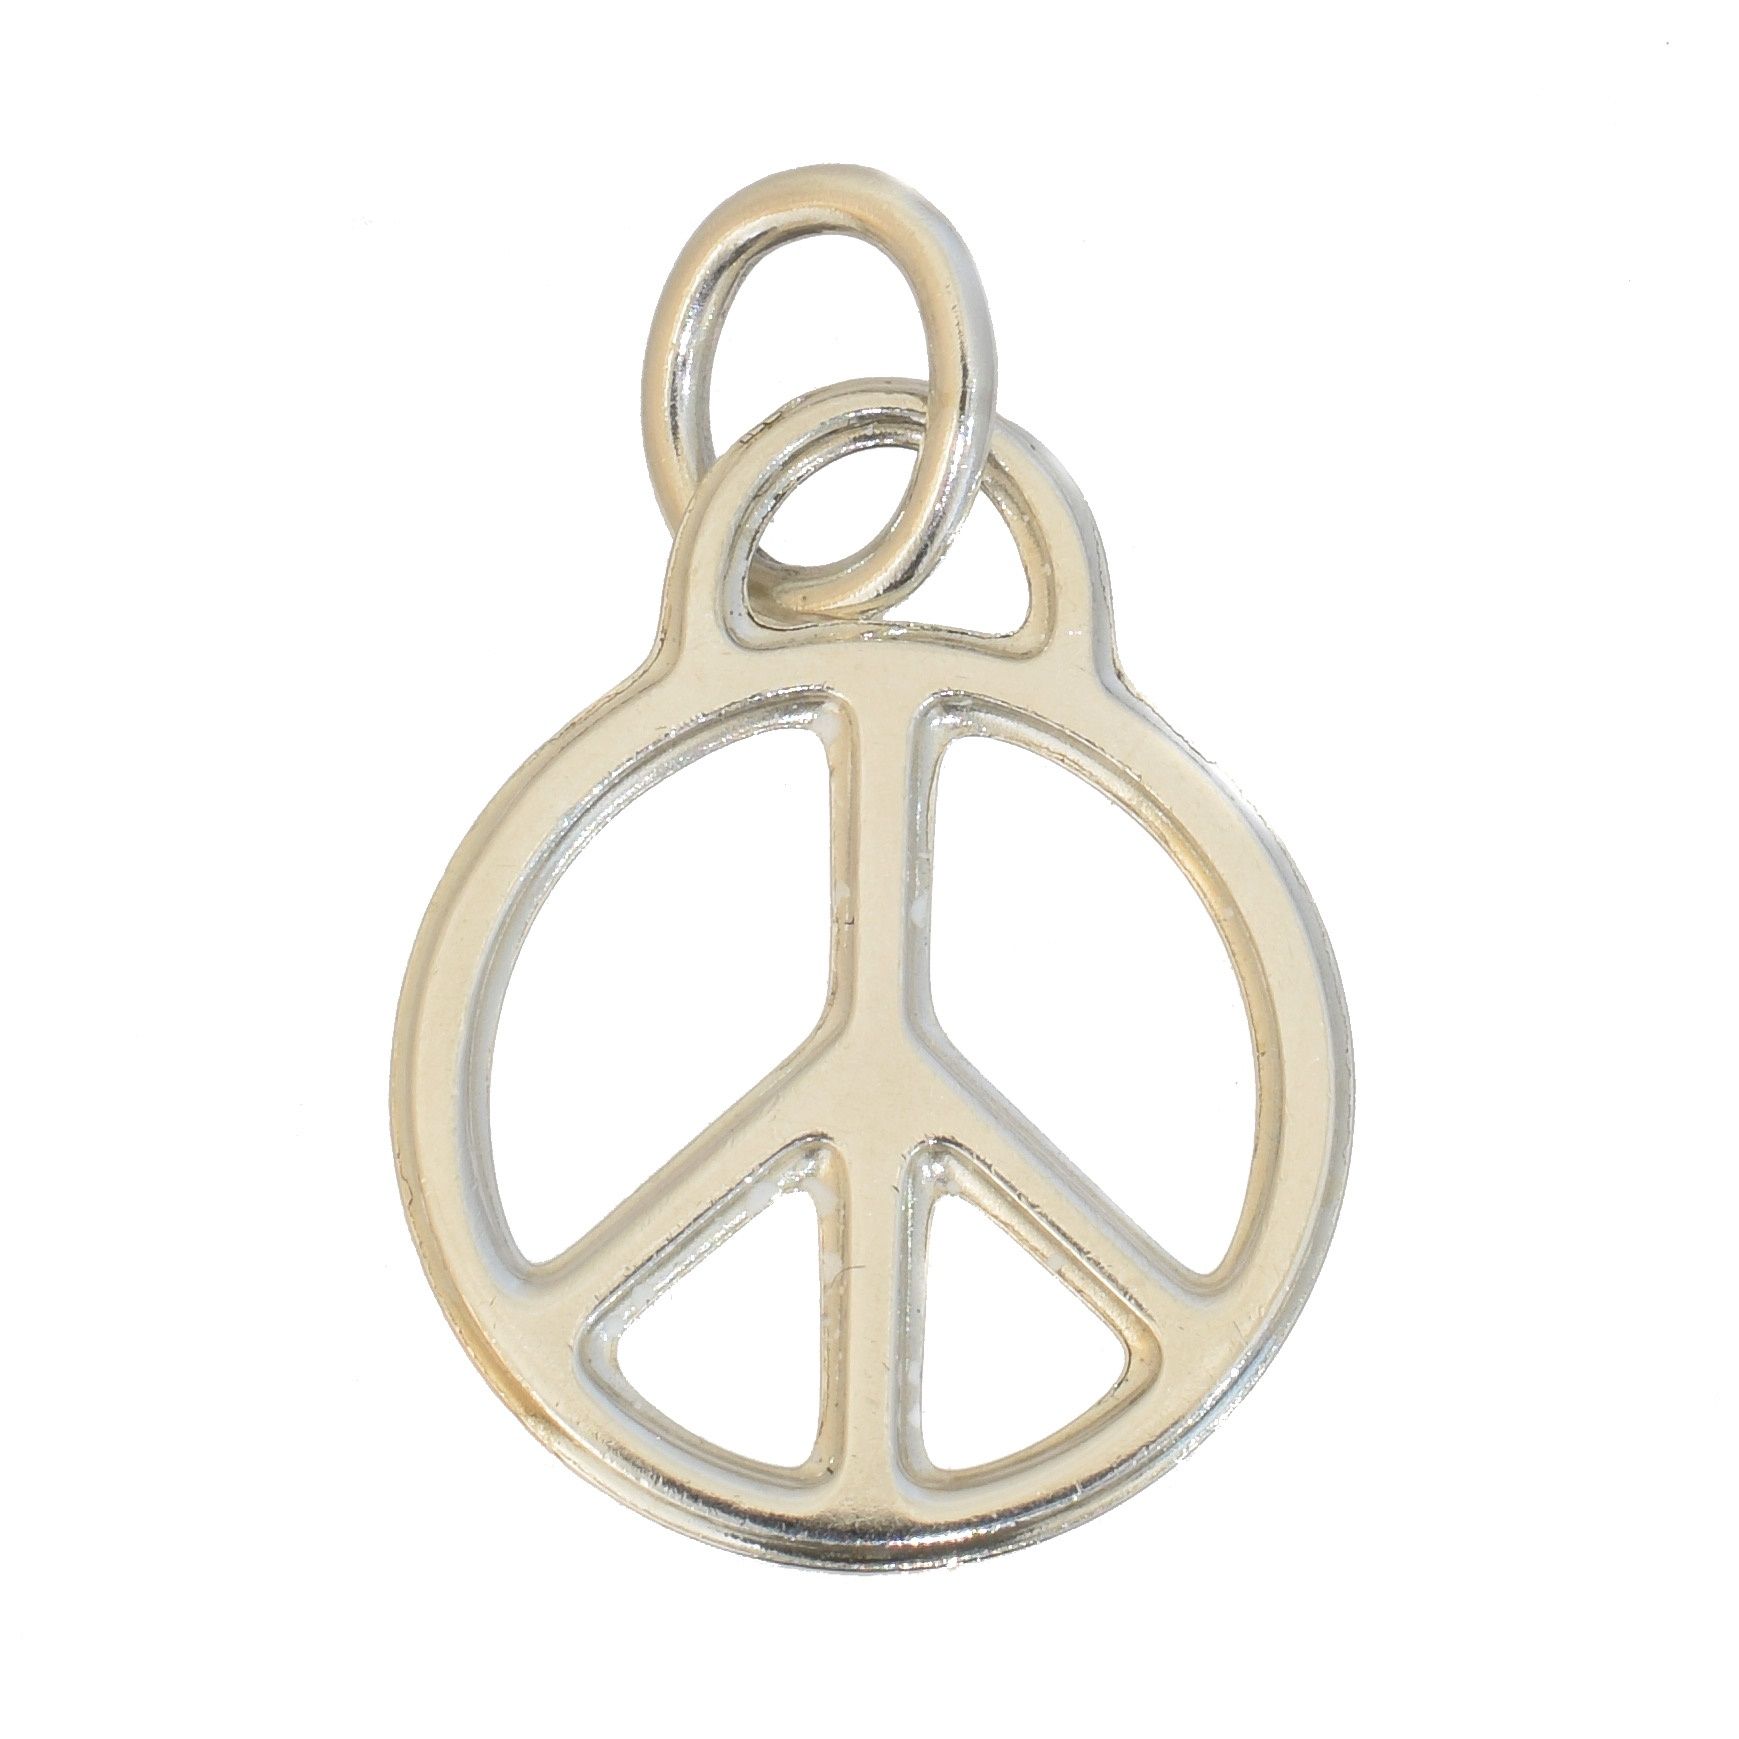 A Tiffany & Co. Peace pendant, 
Friedensanhänger von Tiffany & Co., signiert T&C&hellip;